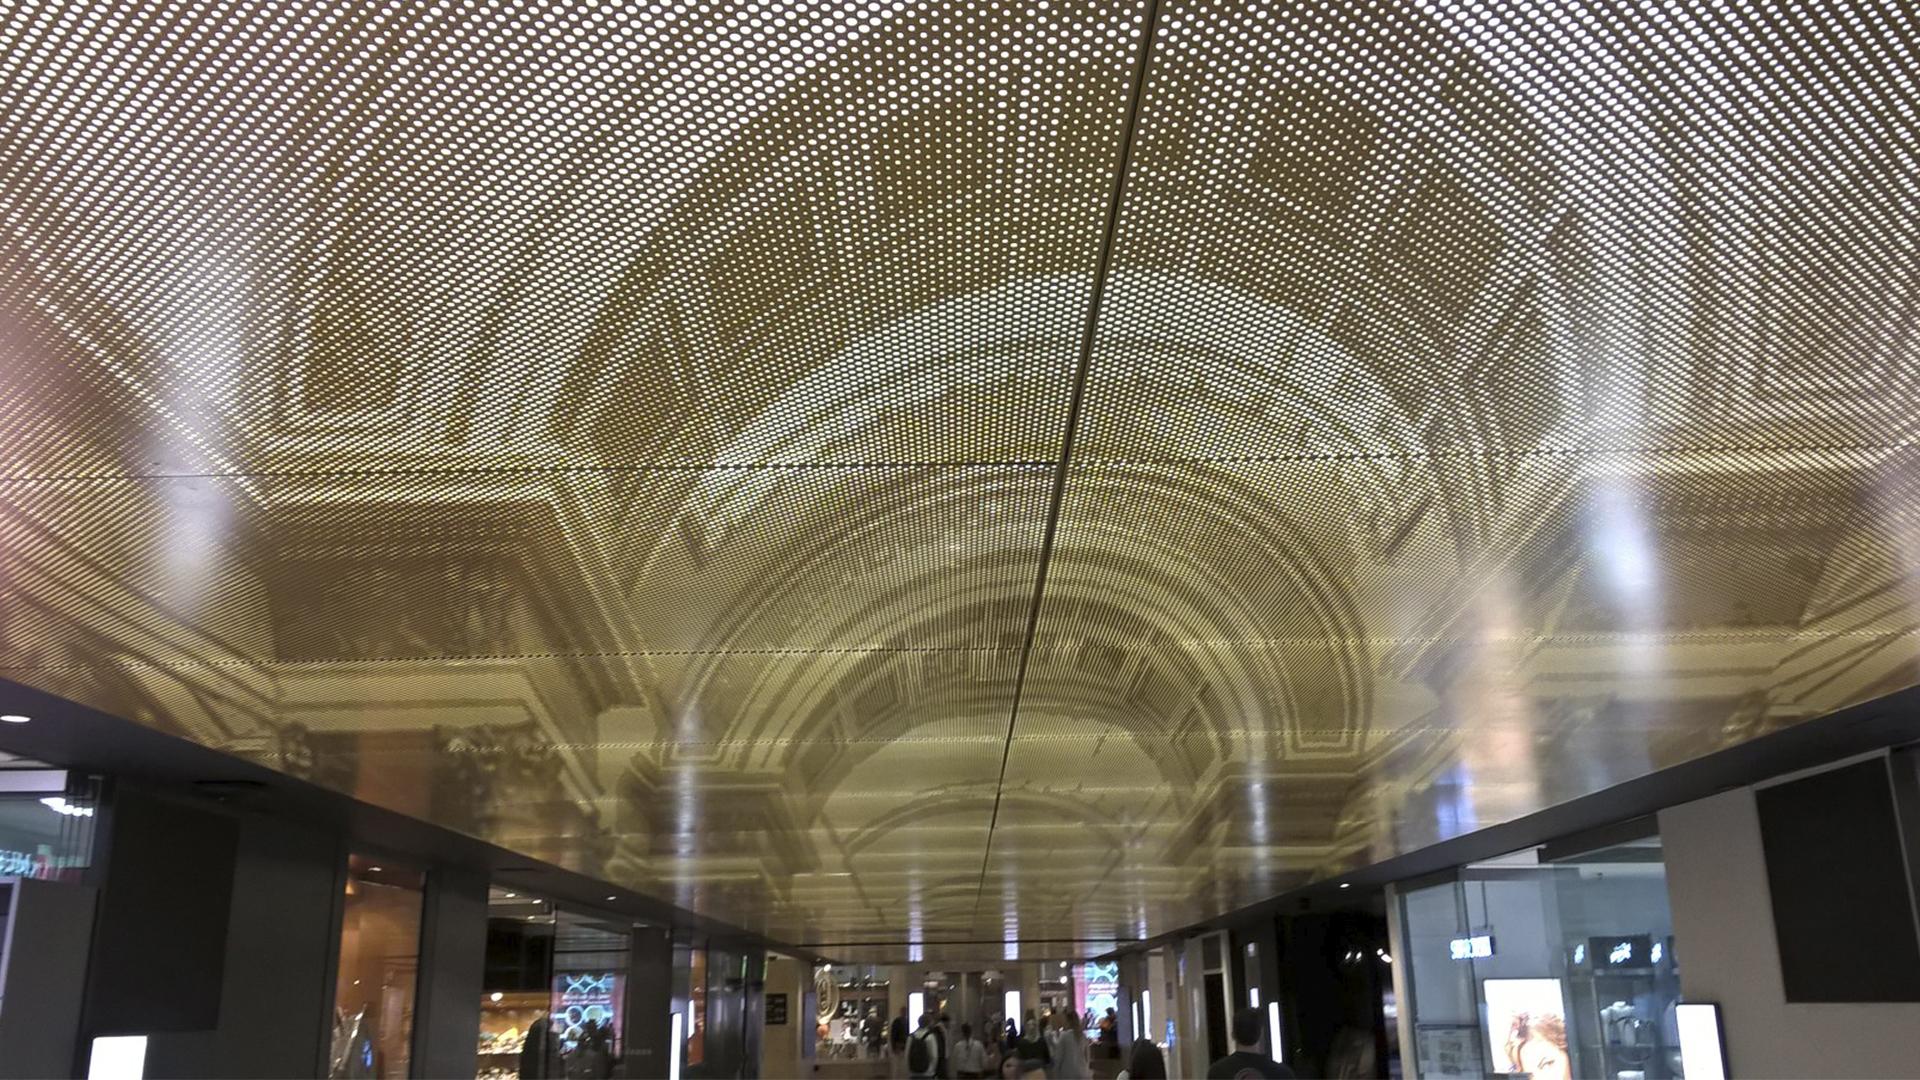 Lumisheet innovative lighting solution by Visotec, an installation at Carousel du Louvre Paris